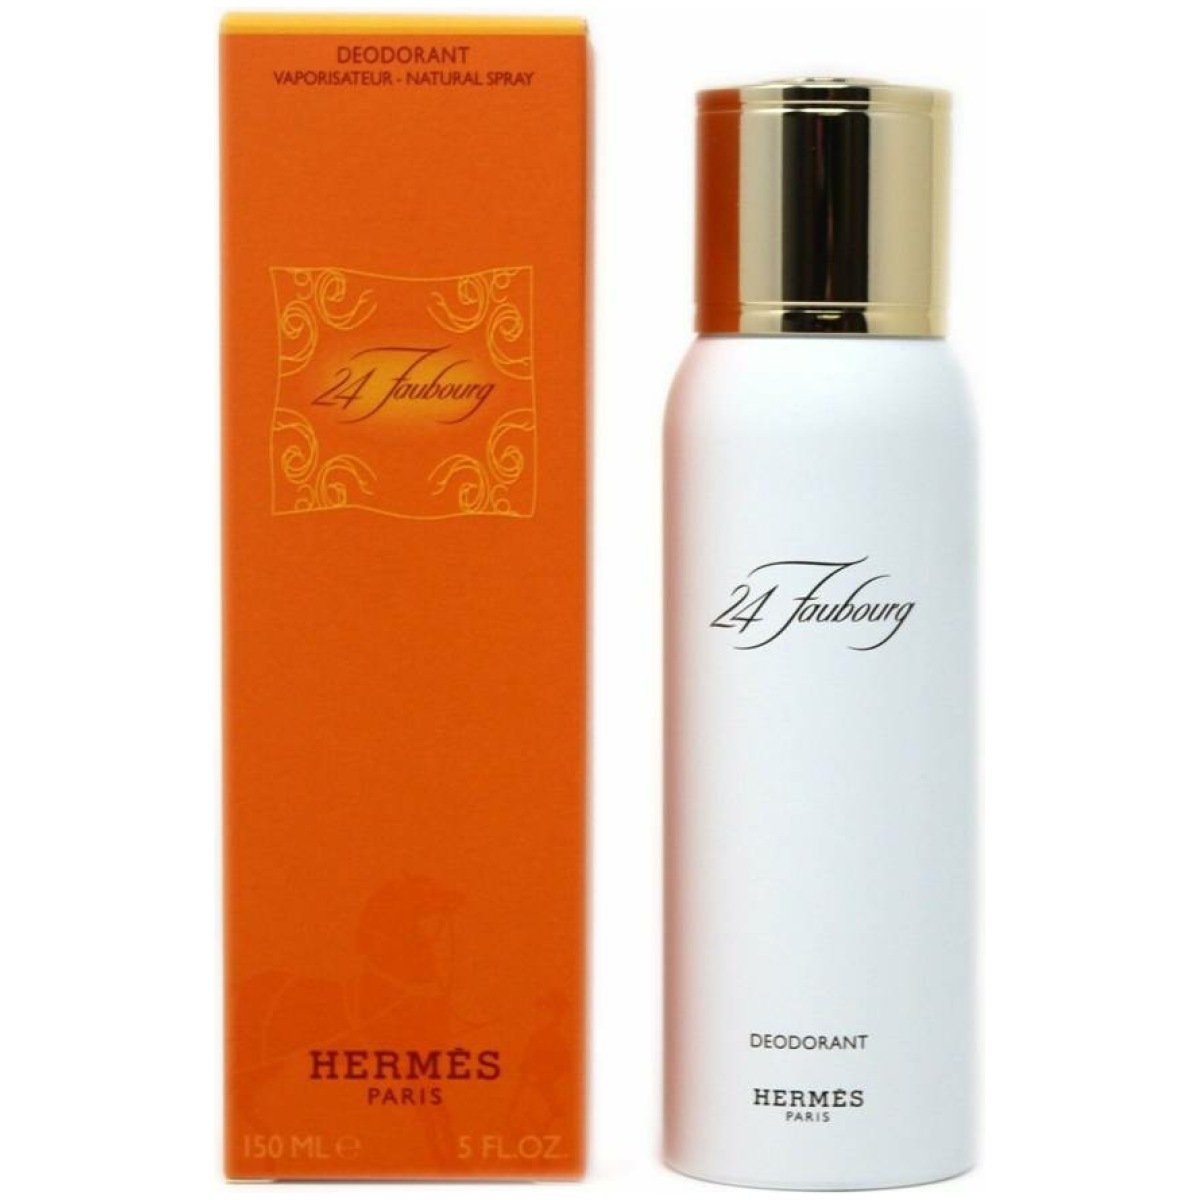 Hermes 24 Faubourg Deodorant Spray For Women 150Ml